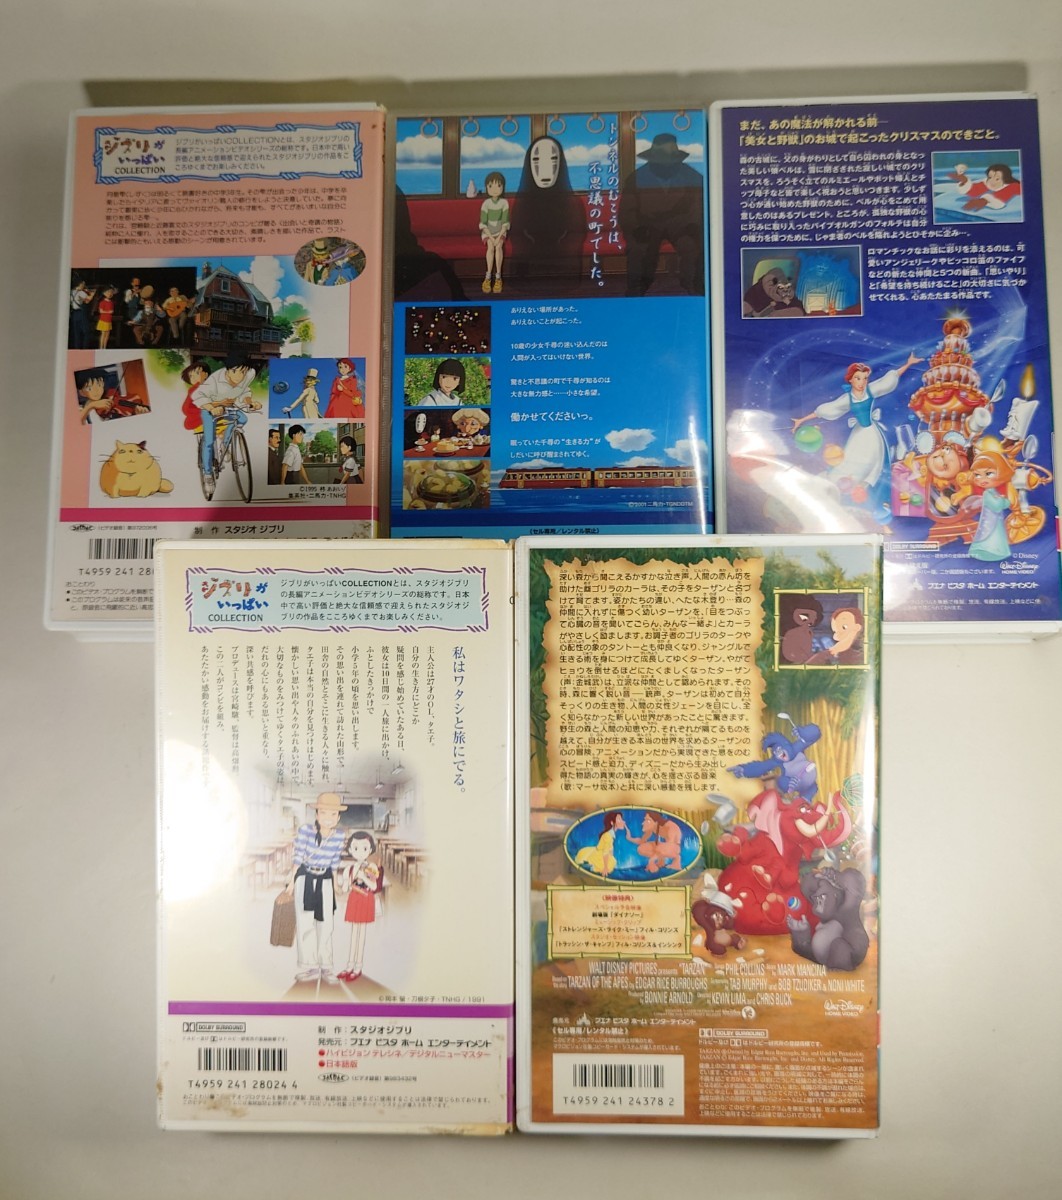 VHS видео фильм Ghibli произведение Disney произведение все 5шт.@[ тысяч . тысяч .. бог ..][ уголок .....][........][ Beauty and the Beast ][ Tarzan ]